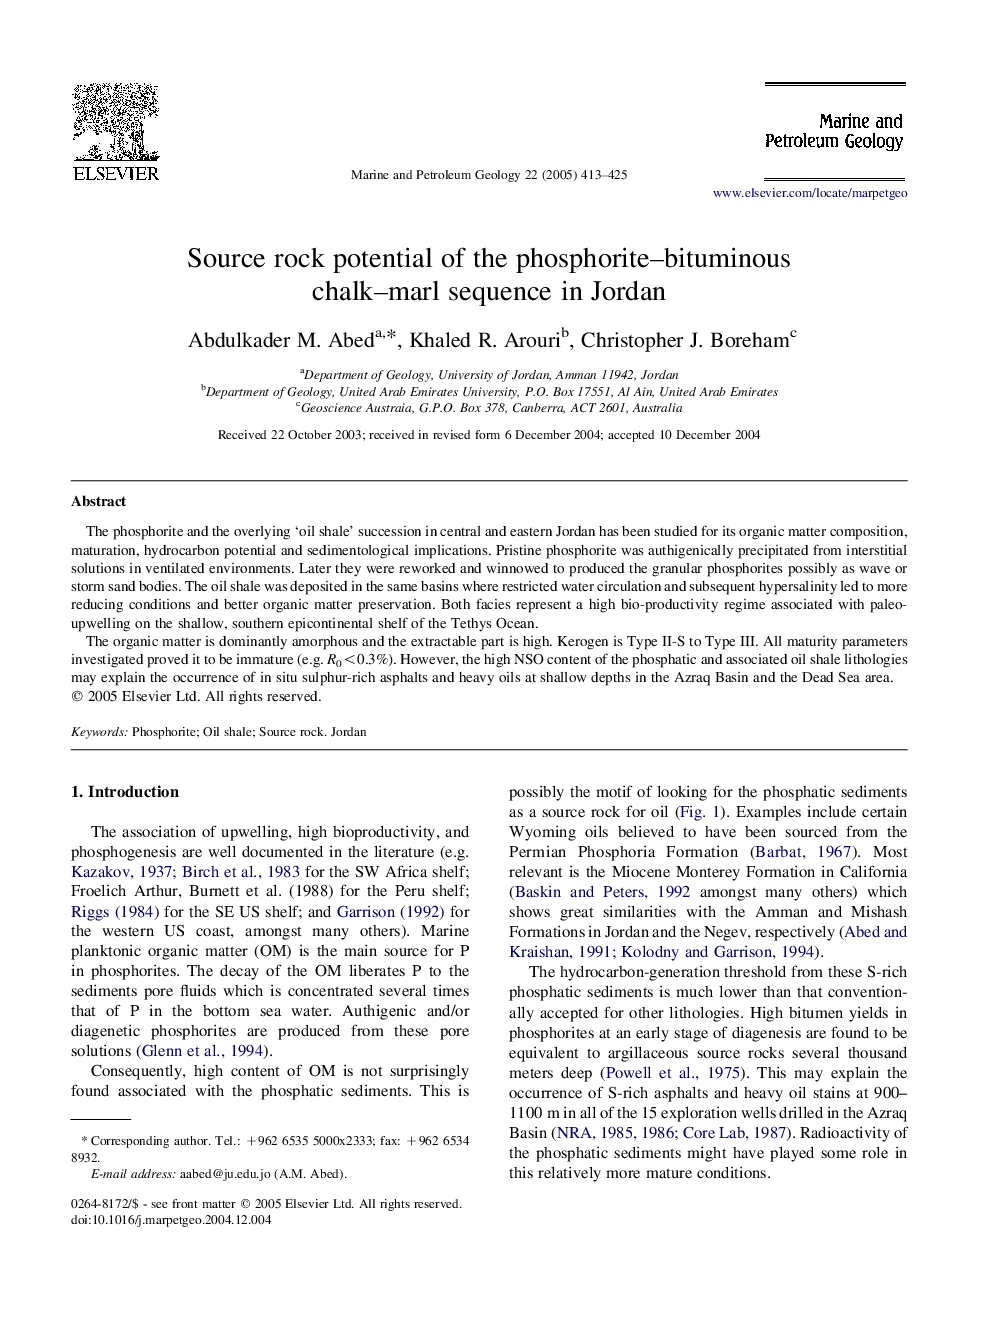 Source rock potential of the phosphorite-bituminous chalk-marl sequence in Jordan